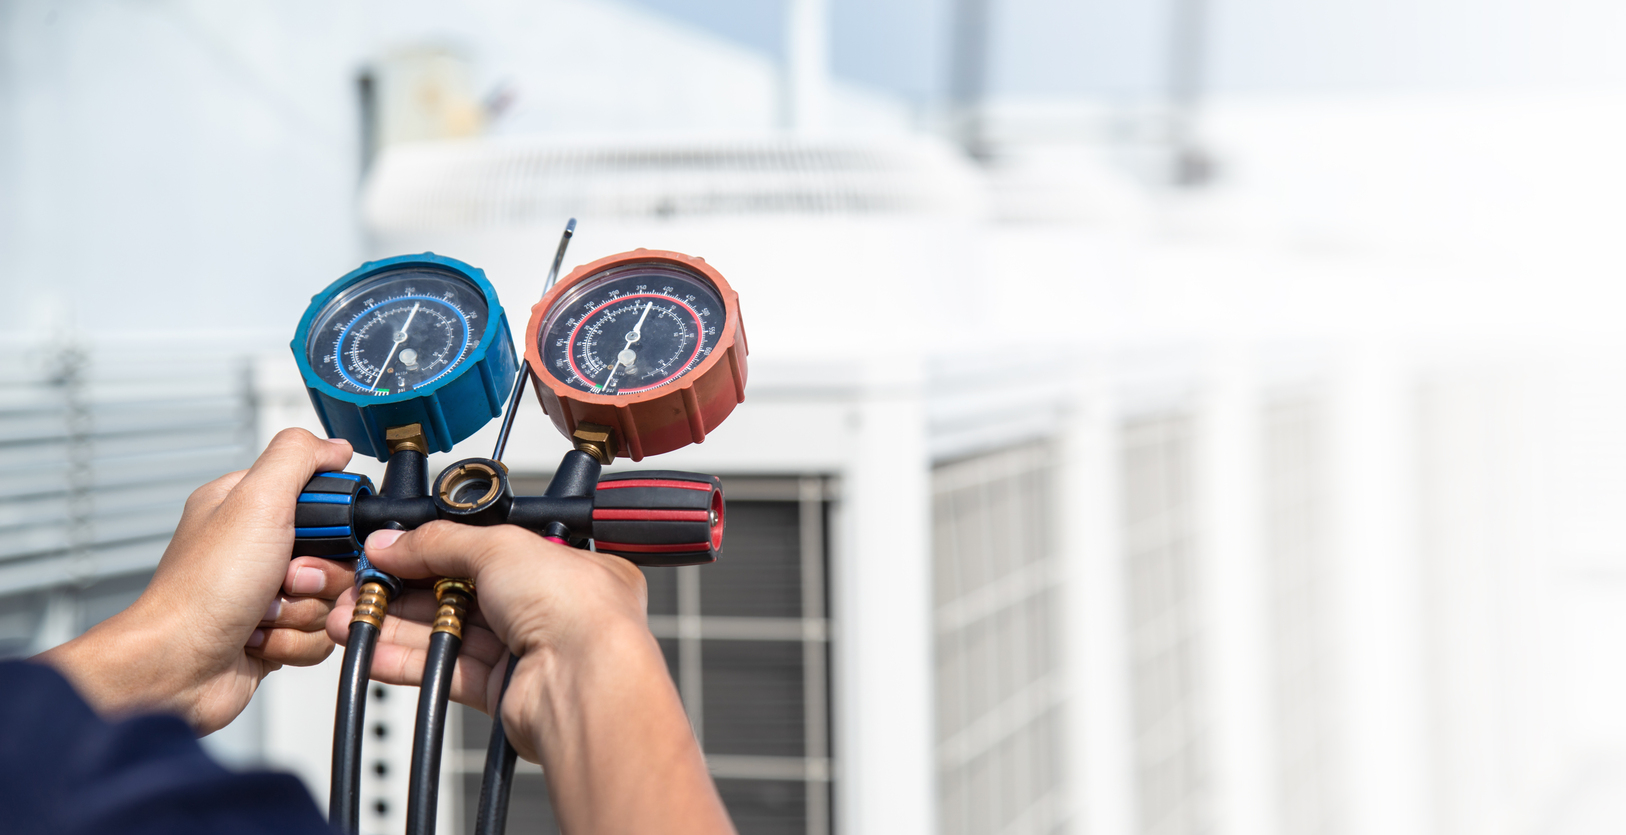 Repairman holding blue and orange measuring HVAC gauges towards an outside HVAC unit